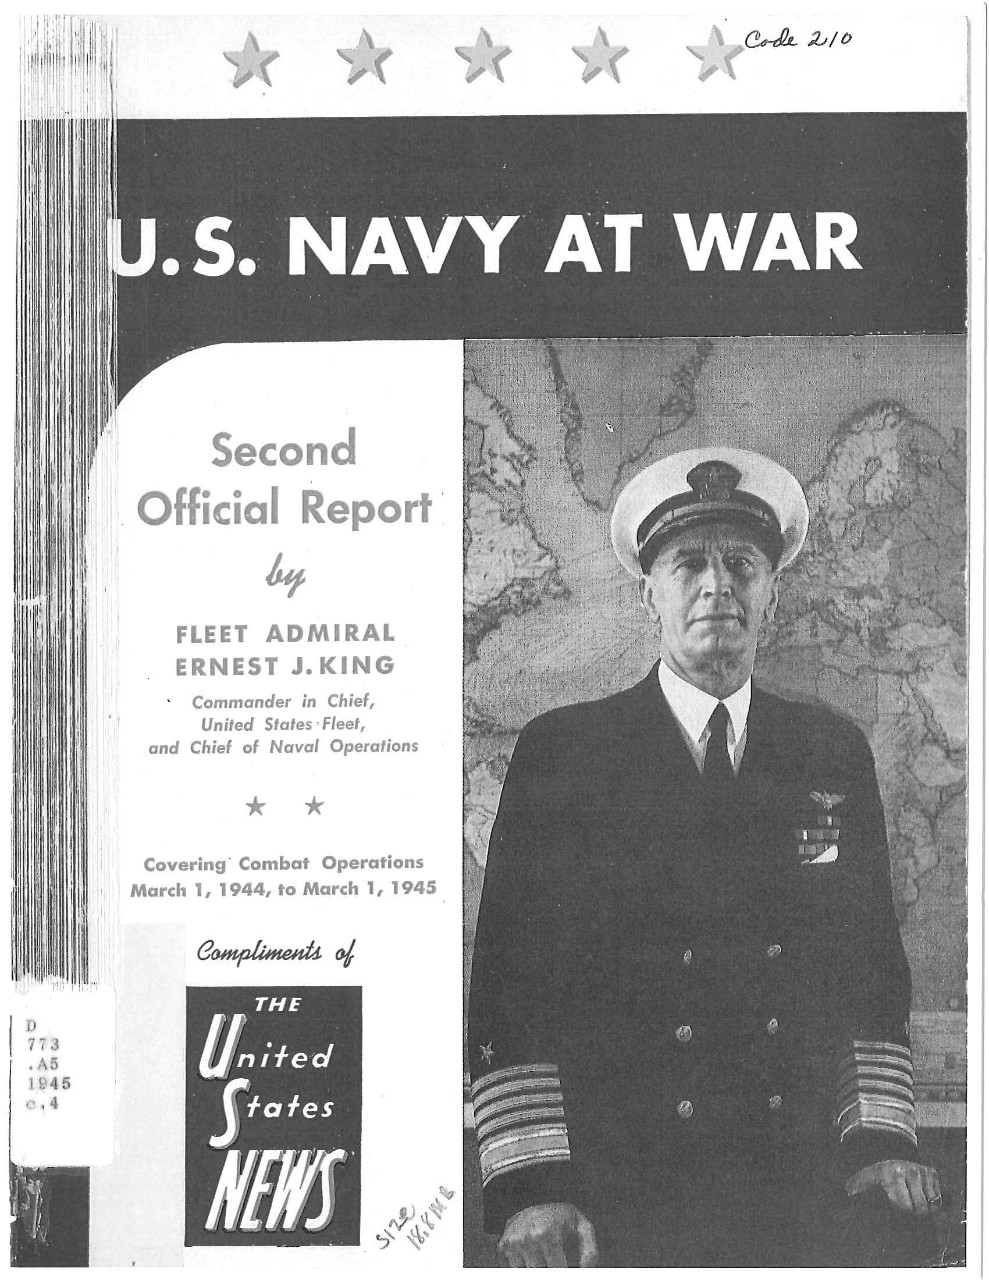 U.S. Navy at War, Second Official Report